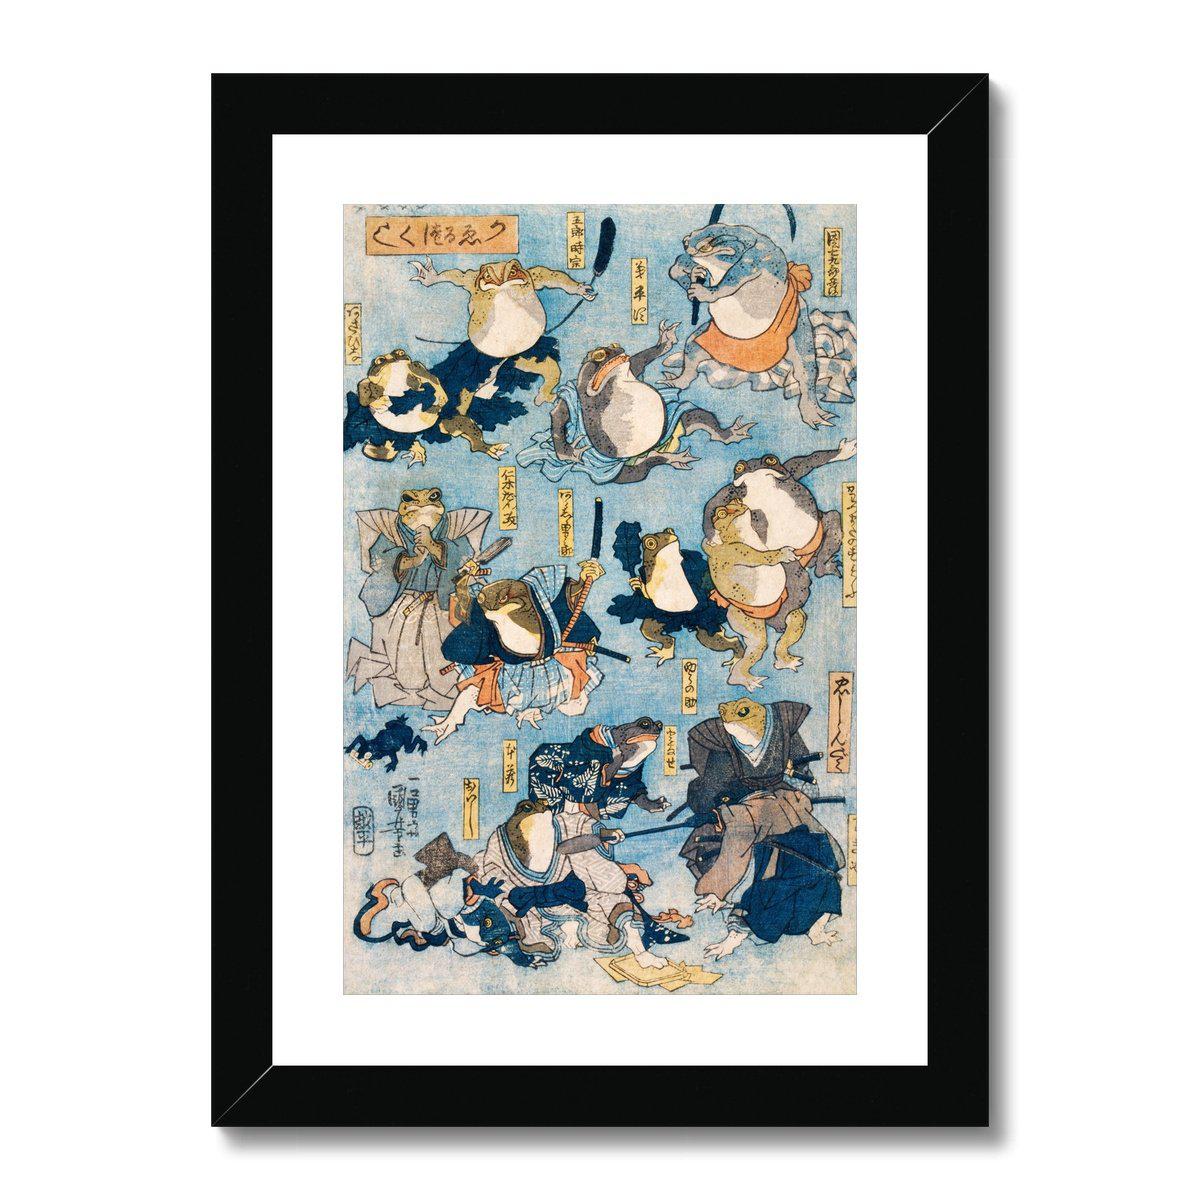 Framed Print 6"x8" / Black Frame Utagawa Kuniyoshi: Famous Kabuki Heroes Played by Frogs | Framed Print